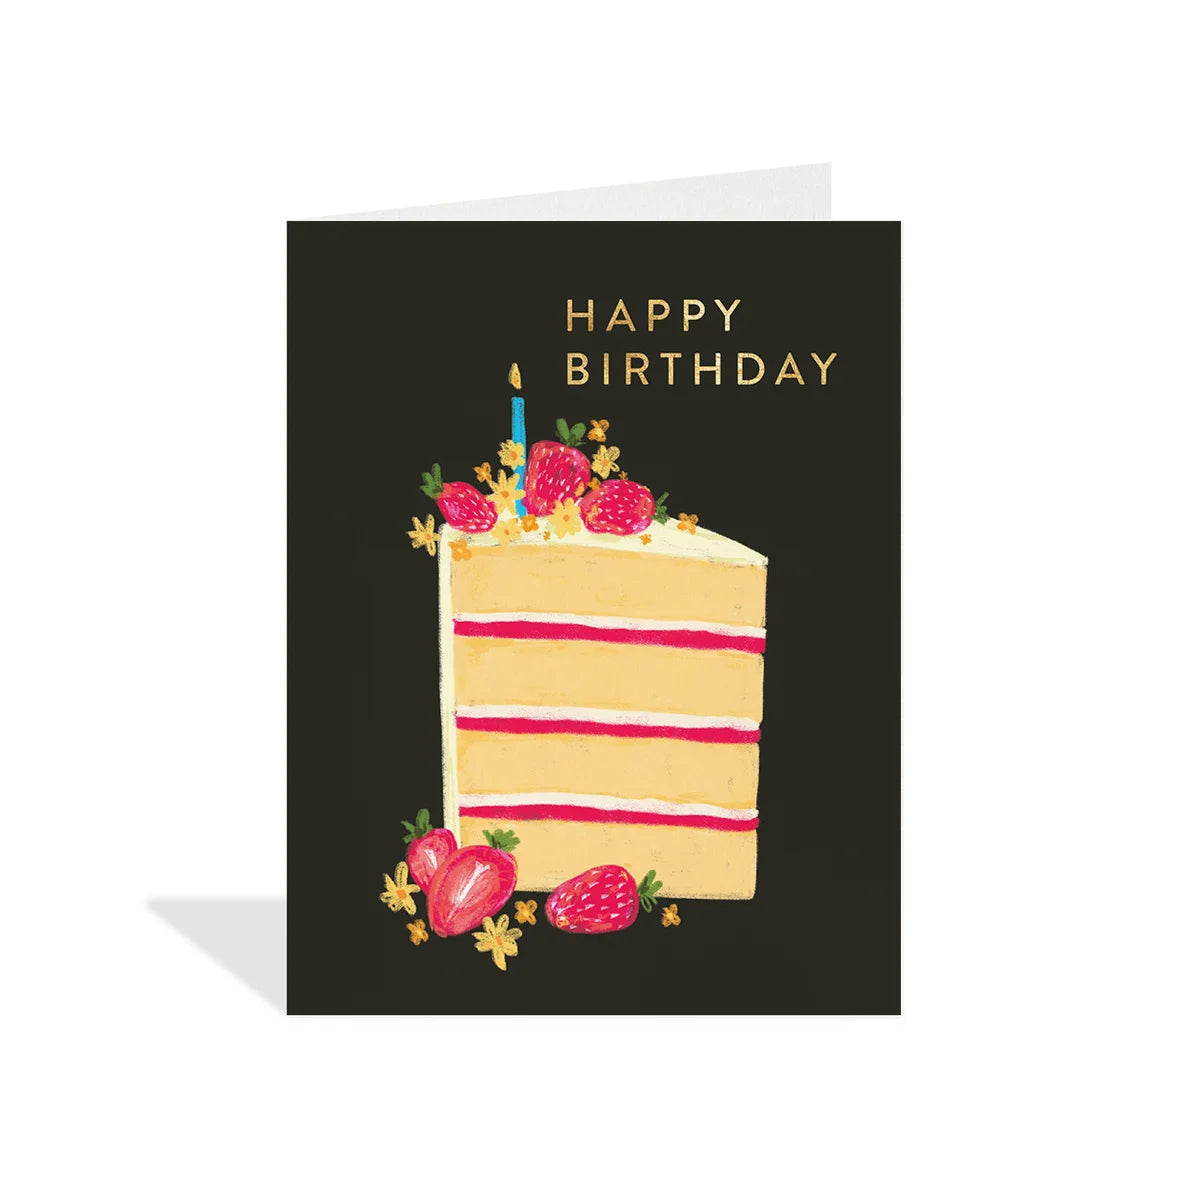 Strawberry Shortcake - Greeting Card